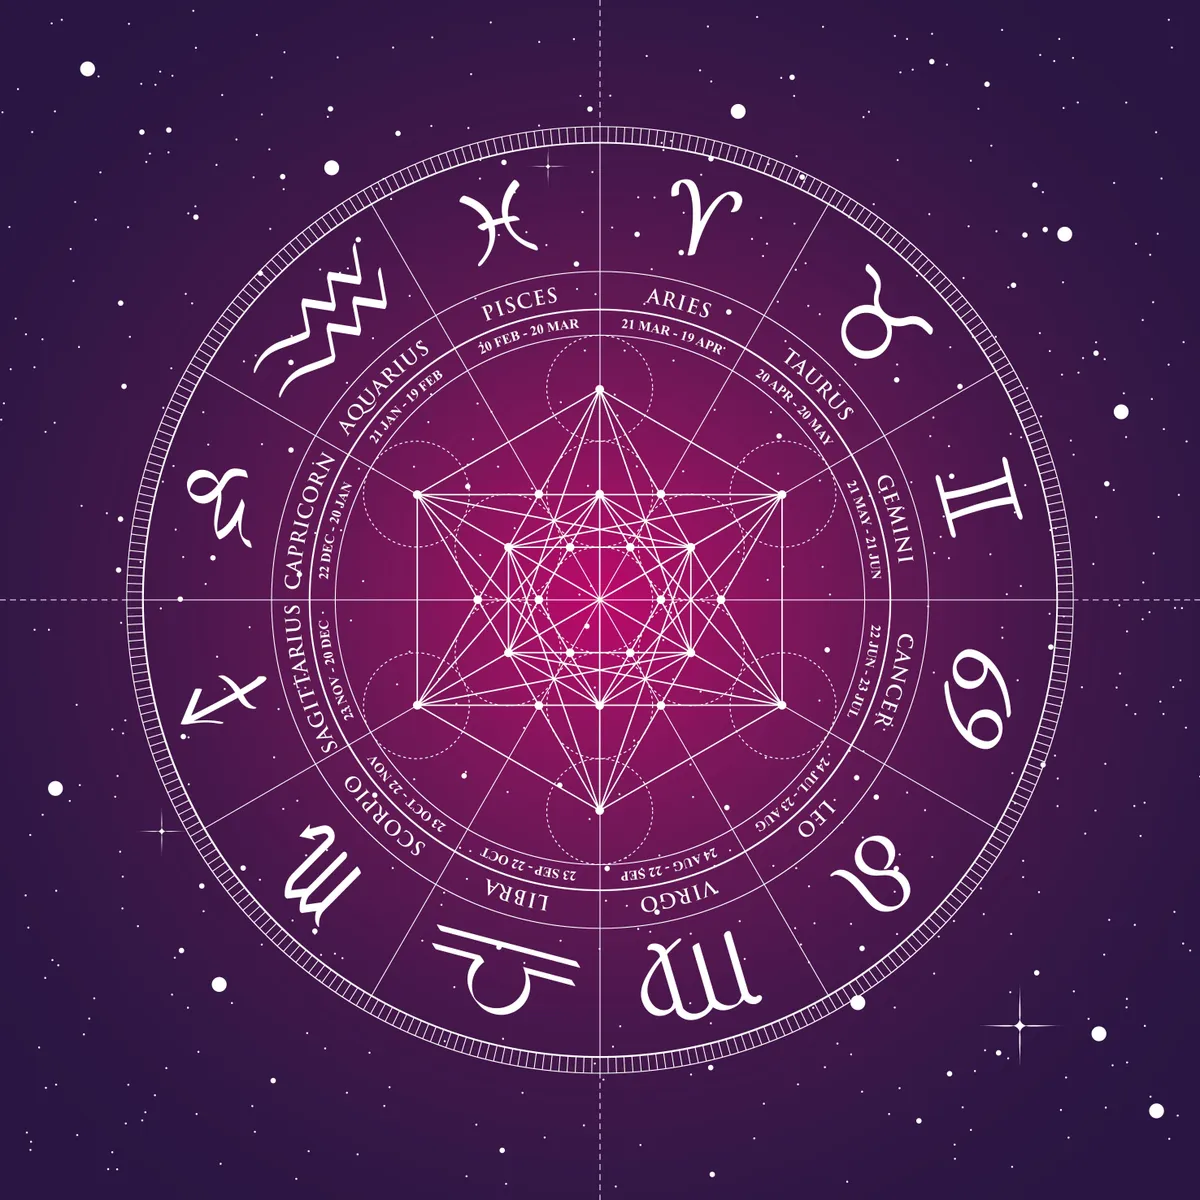 Zodiac signs in a circle. | Photo: Shutterstock